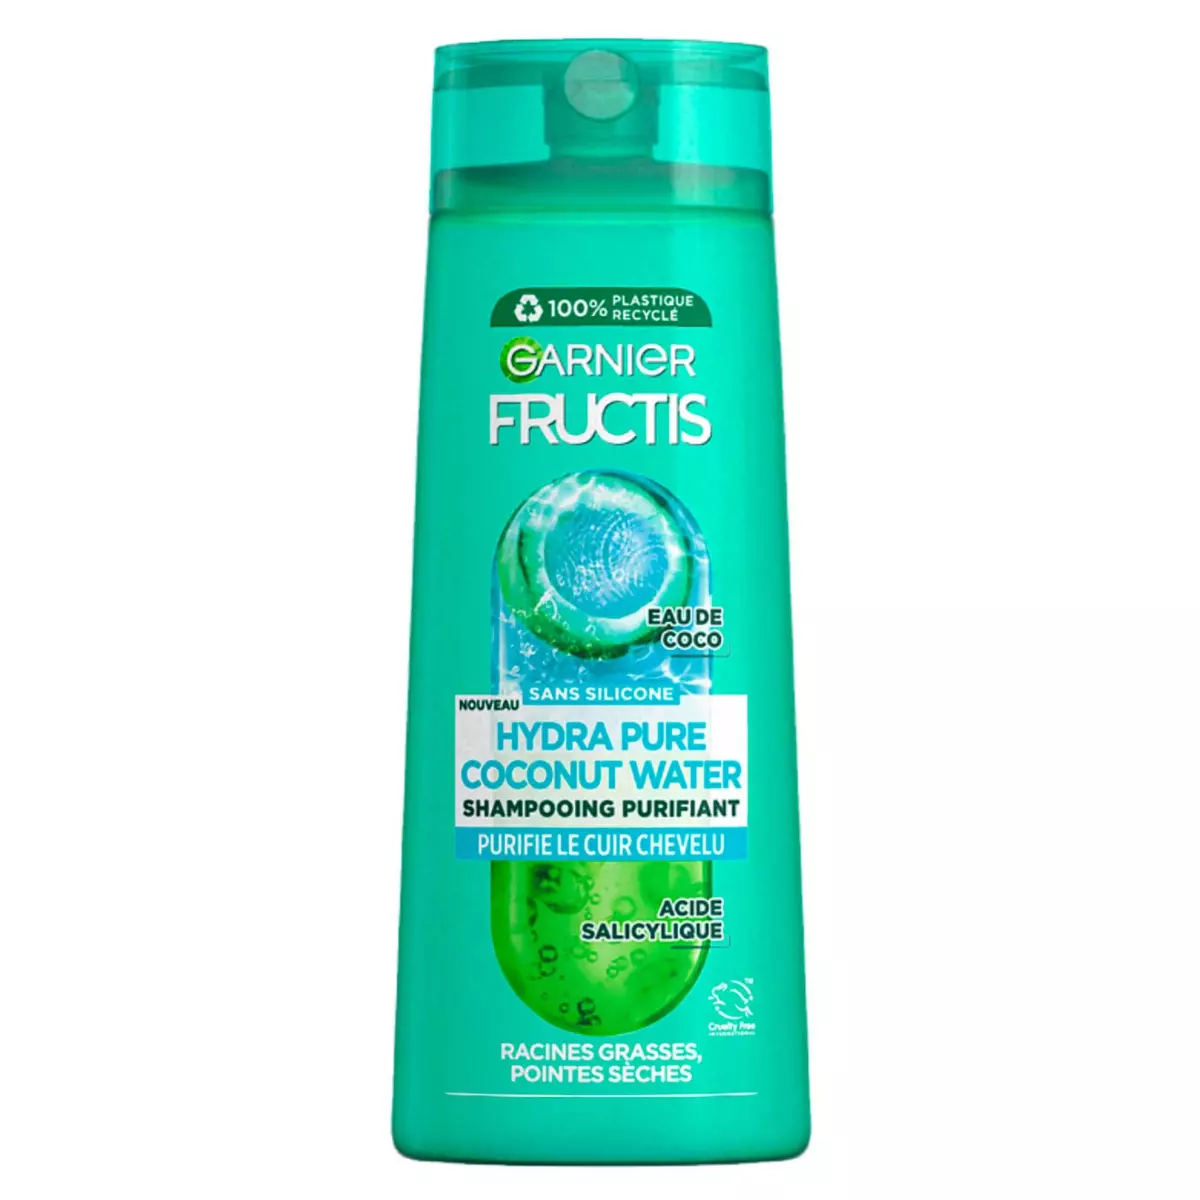 FRUCTIS Hydra pure shampooing fortifiant eau de coco 250ml